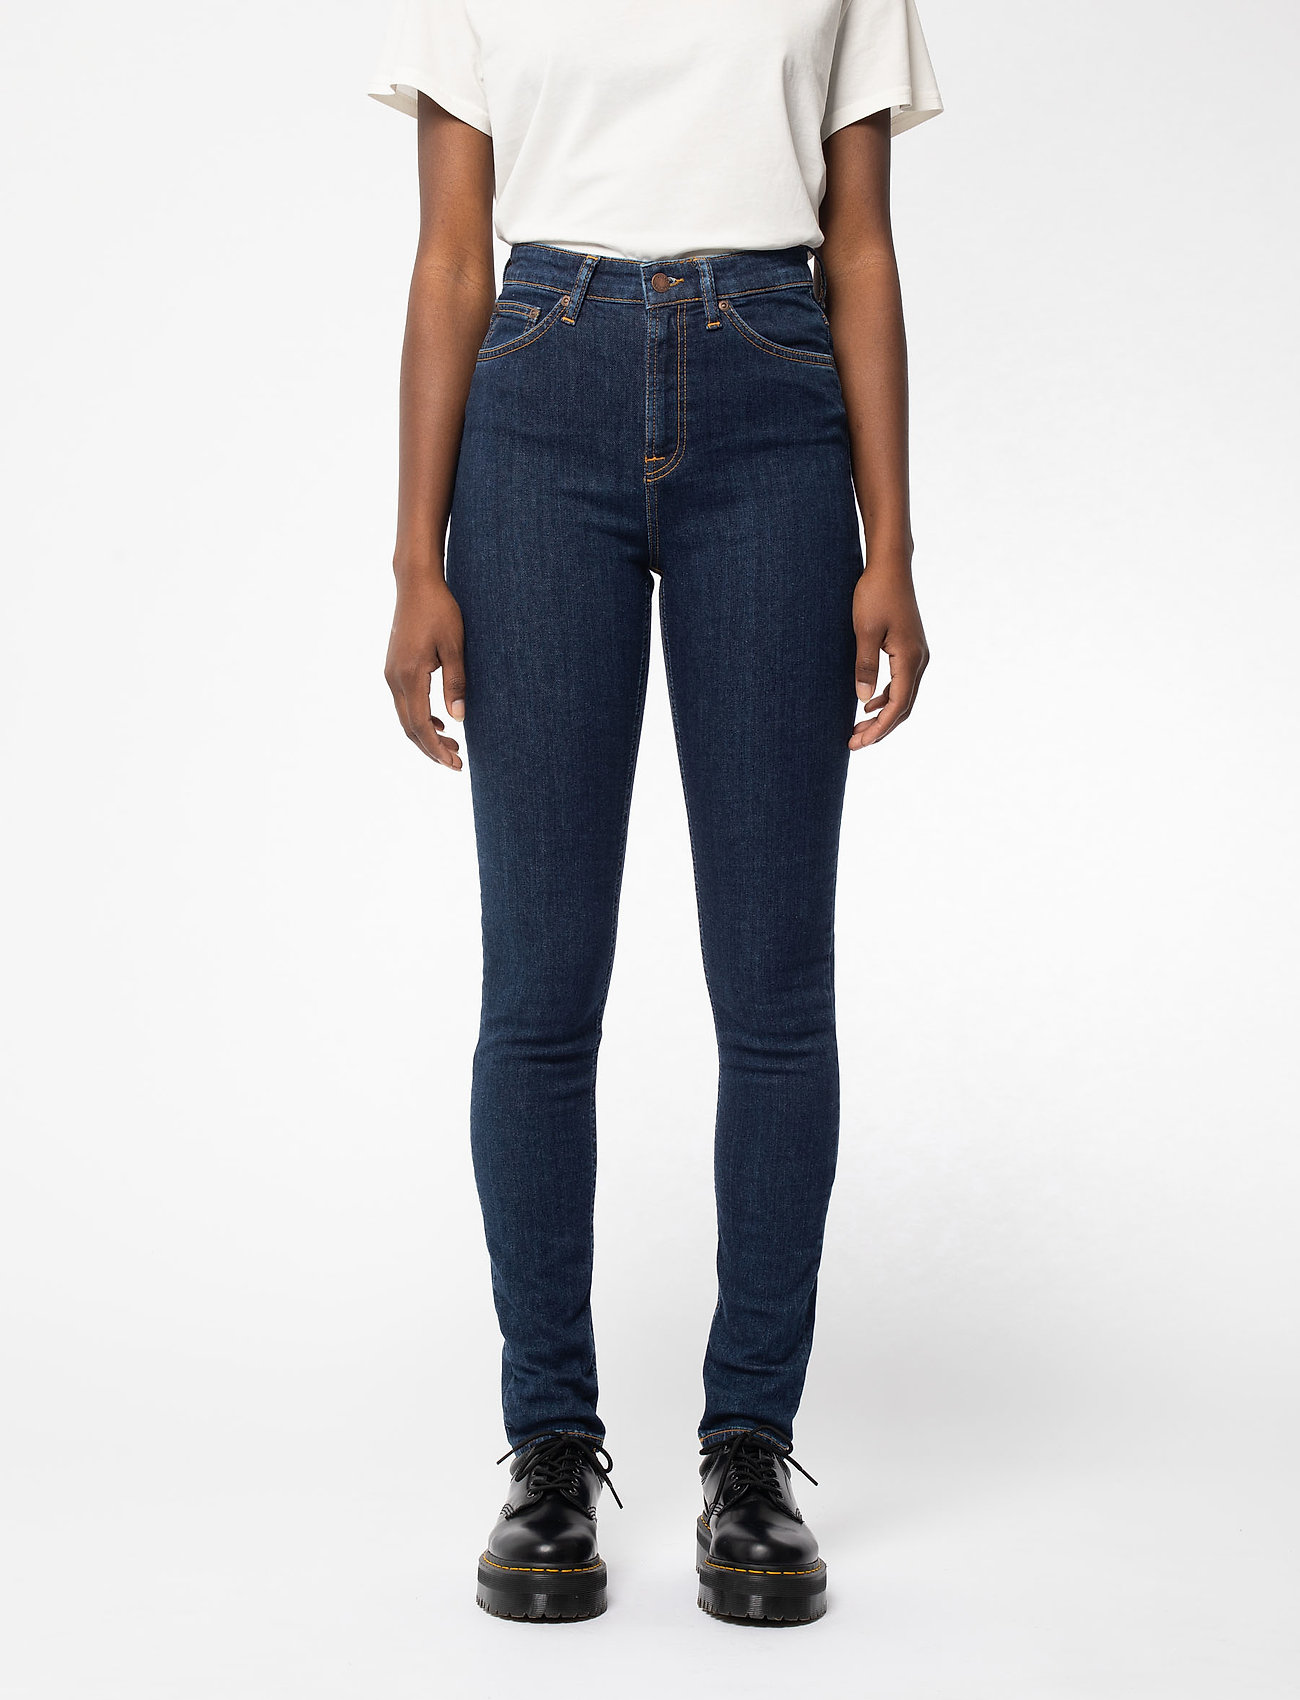 Grommen rit duim Nudie Jeans Hightop Tilde - Skinny jeans - Boozt.com